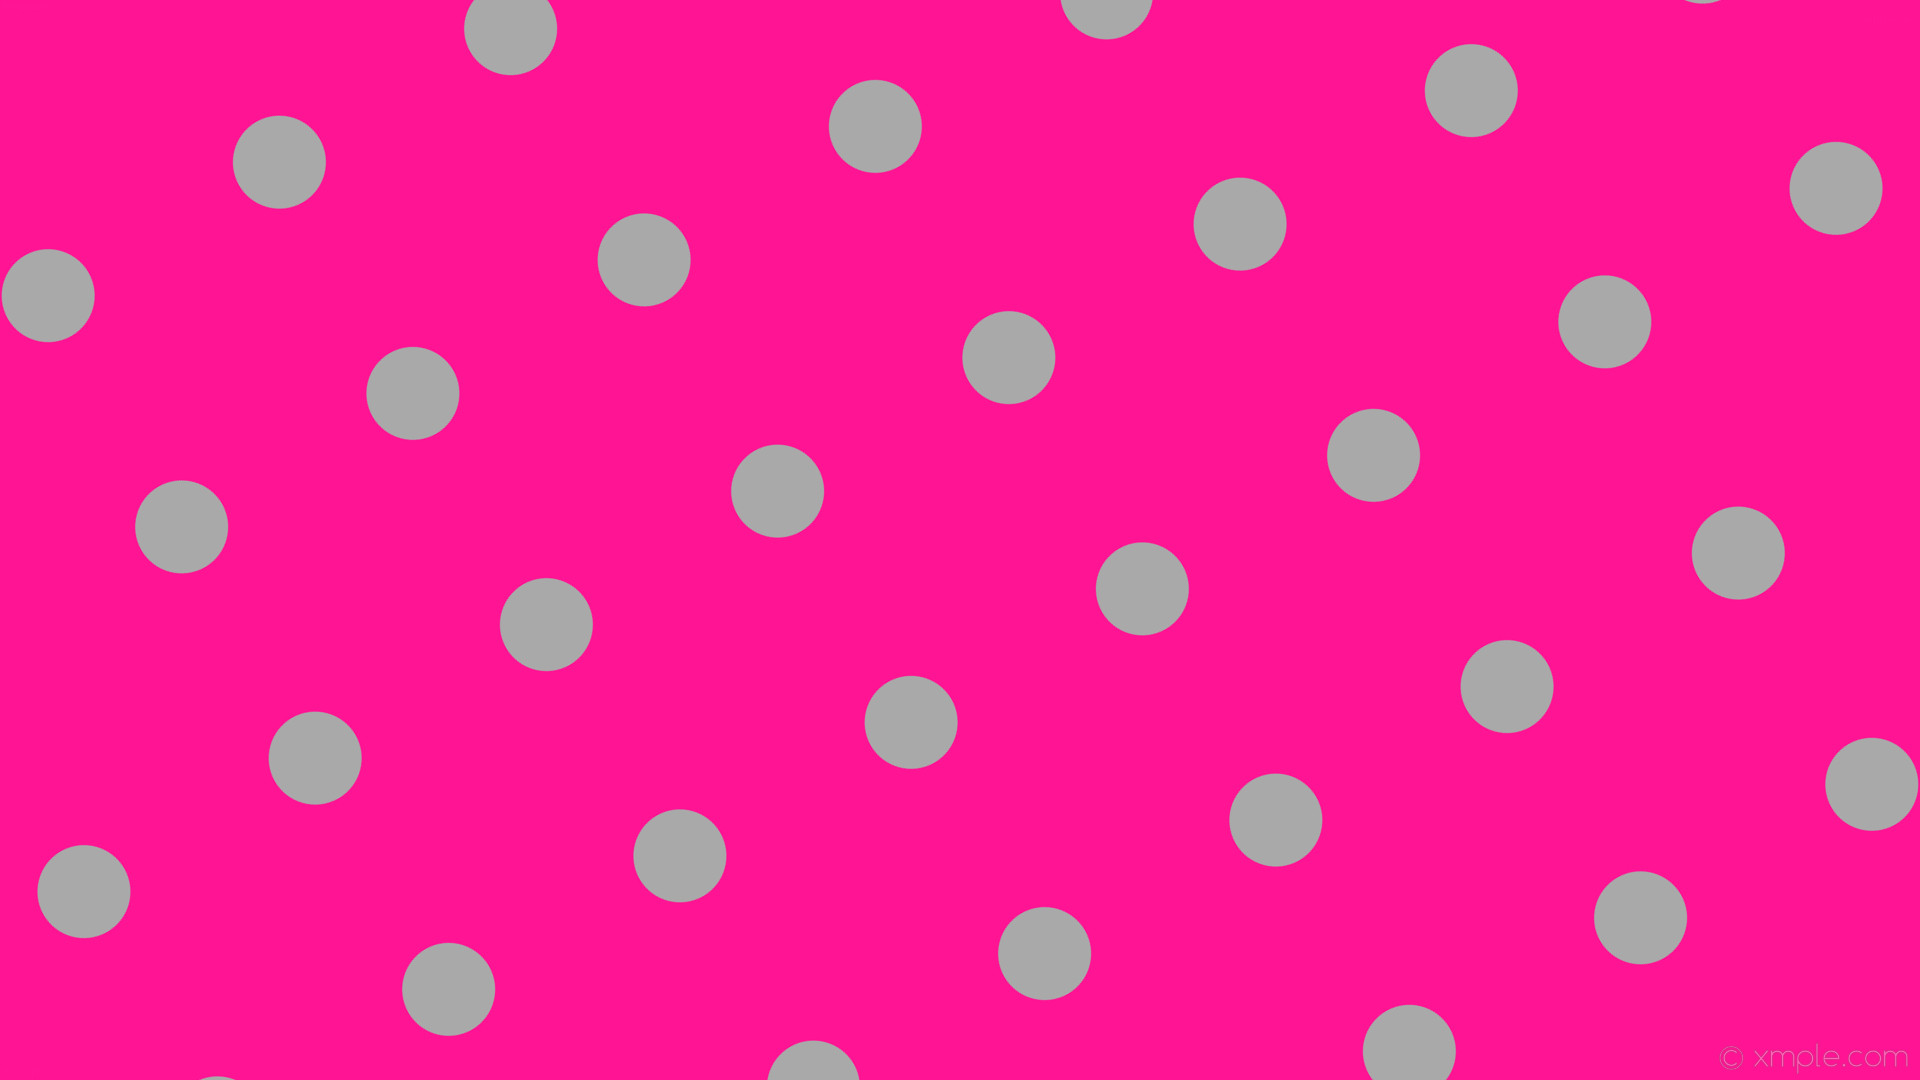 1920x1080 wallpaper grey pink polka dots spots deep pink dark gray #ff1493 #a9a9a9 30Â°